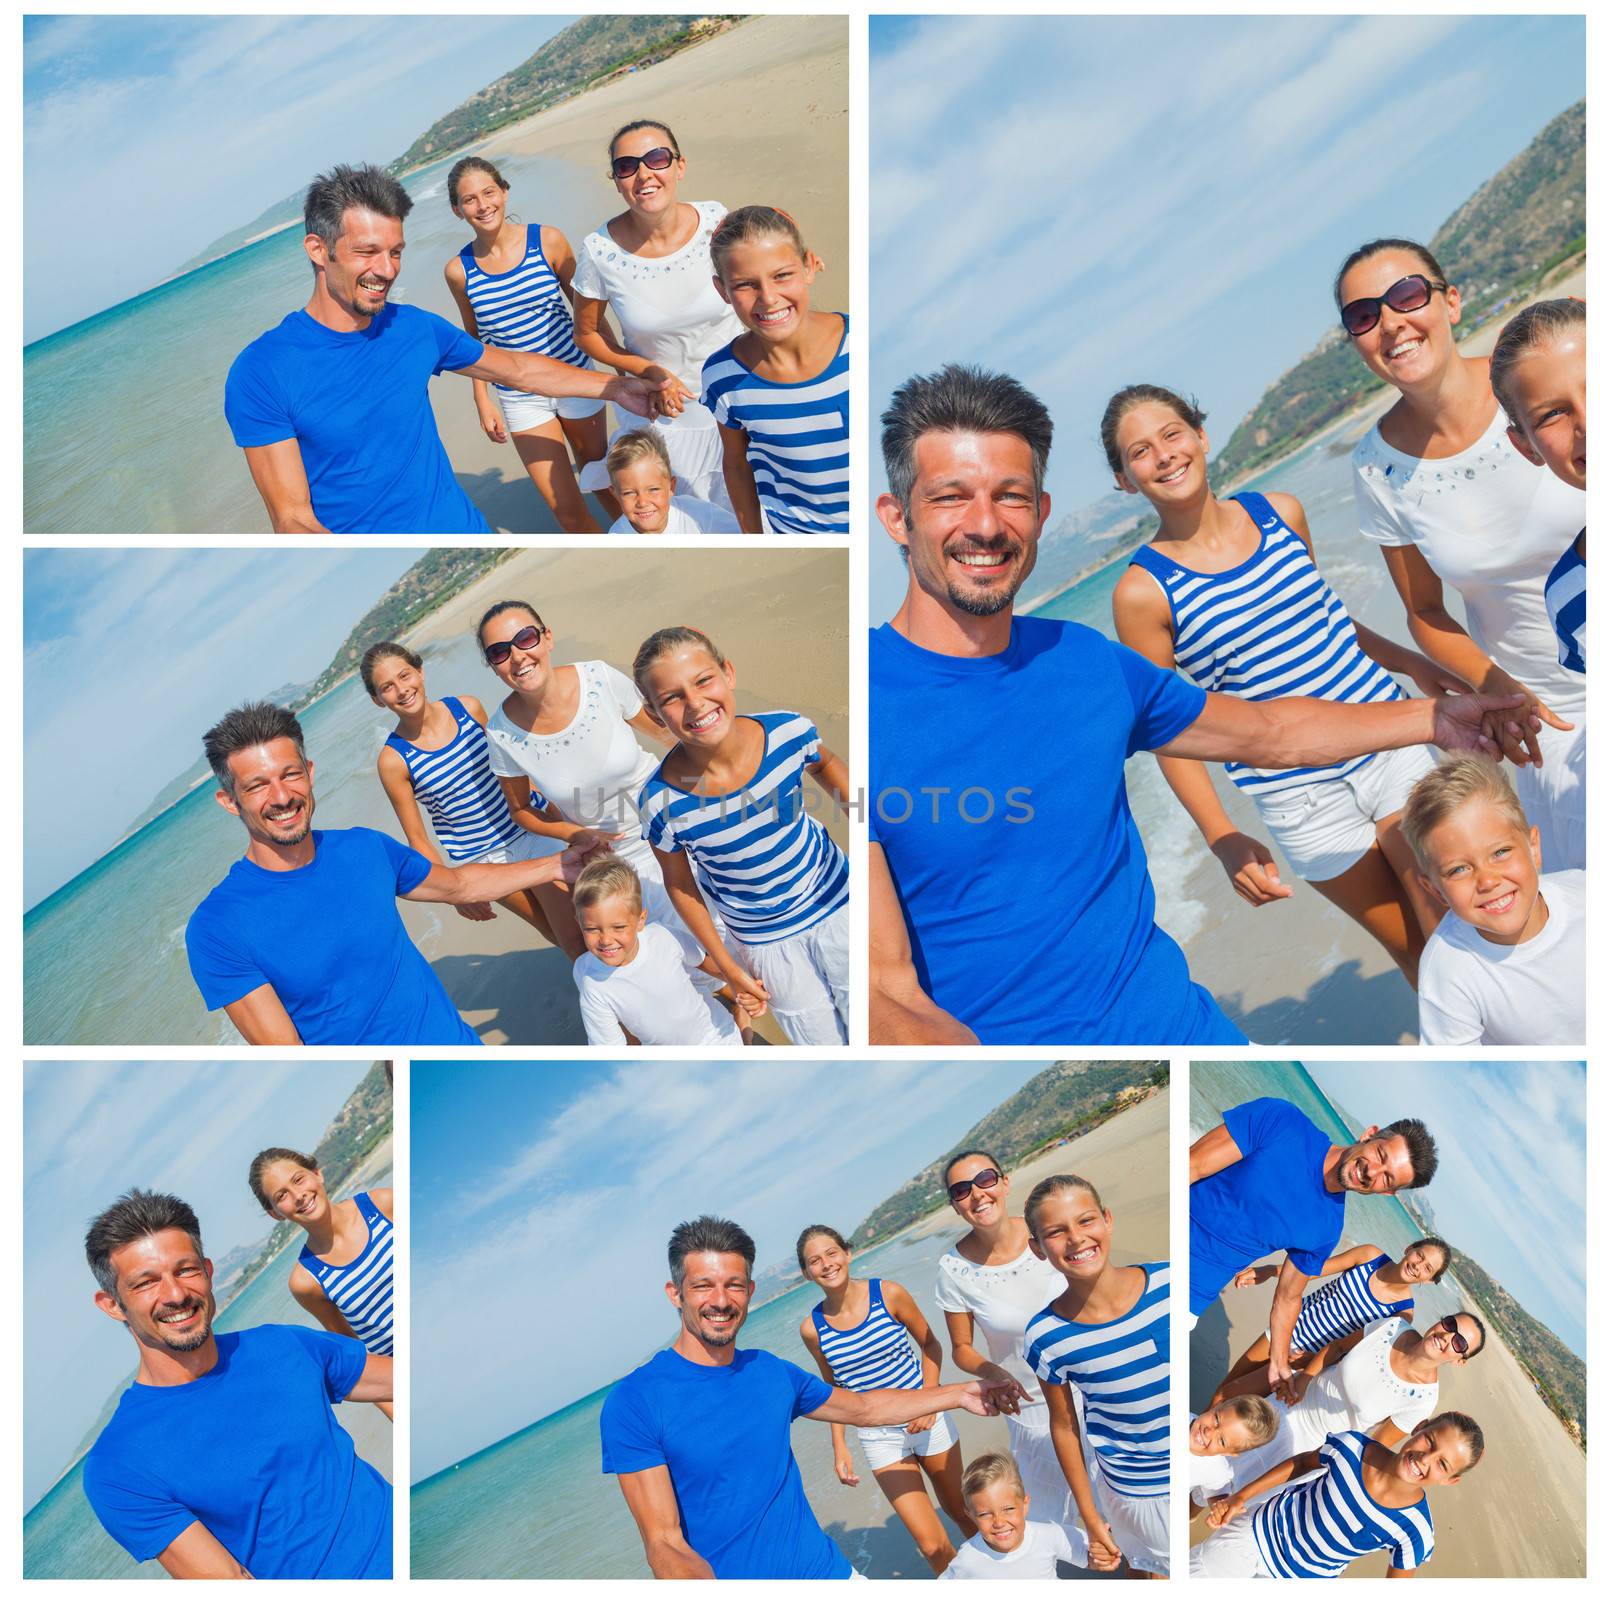 Family having fun on beach by maxoliki